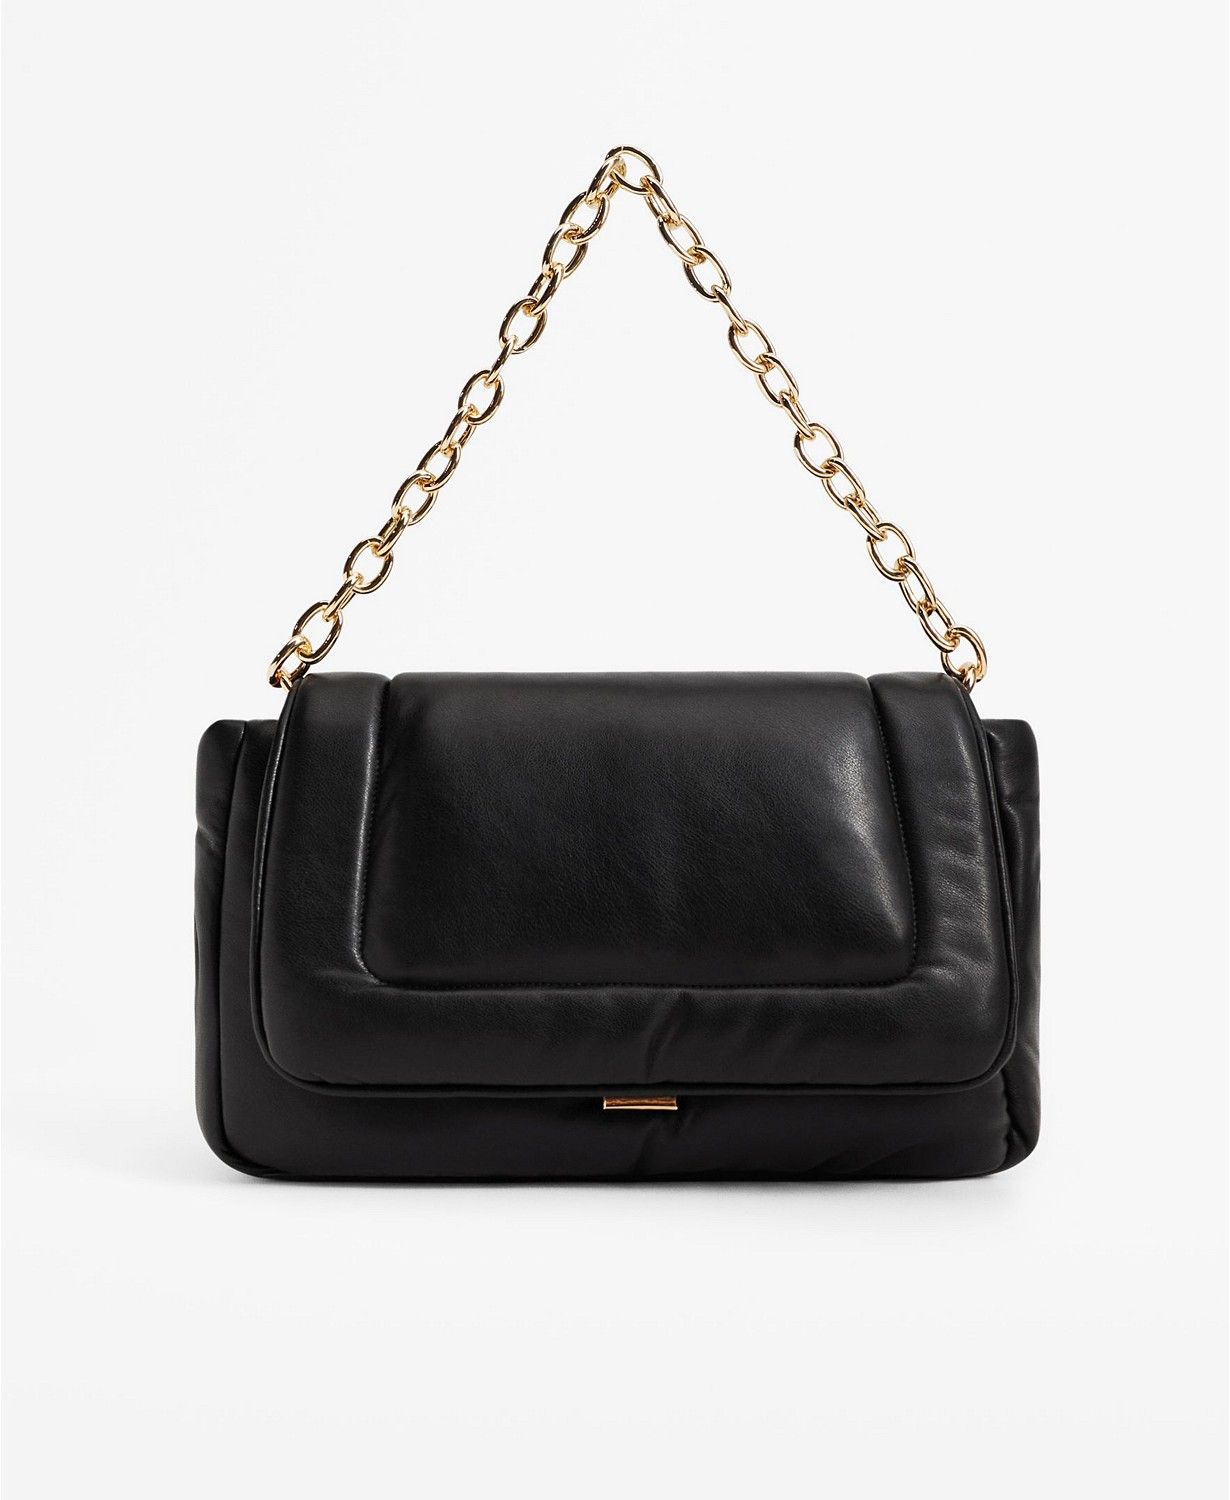 MANGO Women's Quilted Chain Bag & Reviews - All Handbags & Wallets - Handbags & Accessories - Mac... | Macys (US)